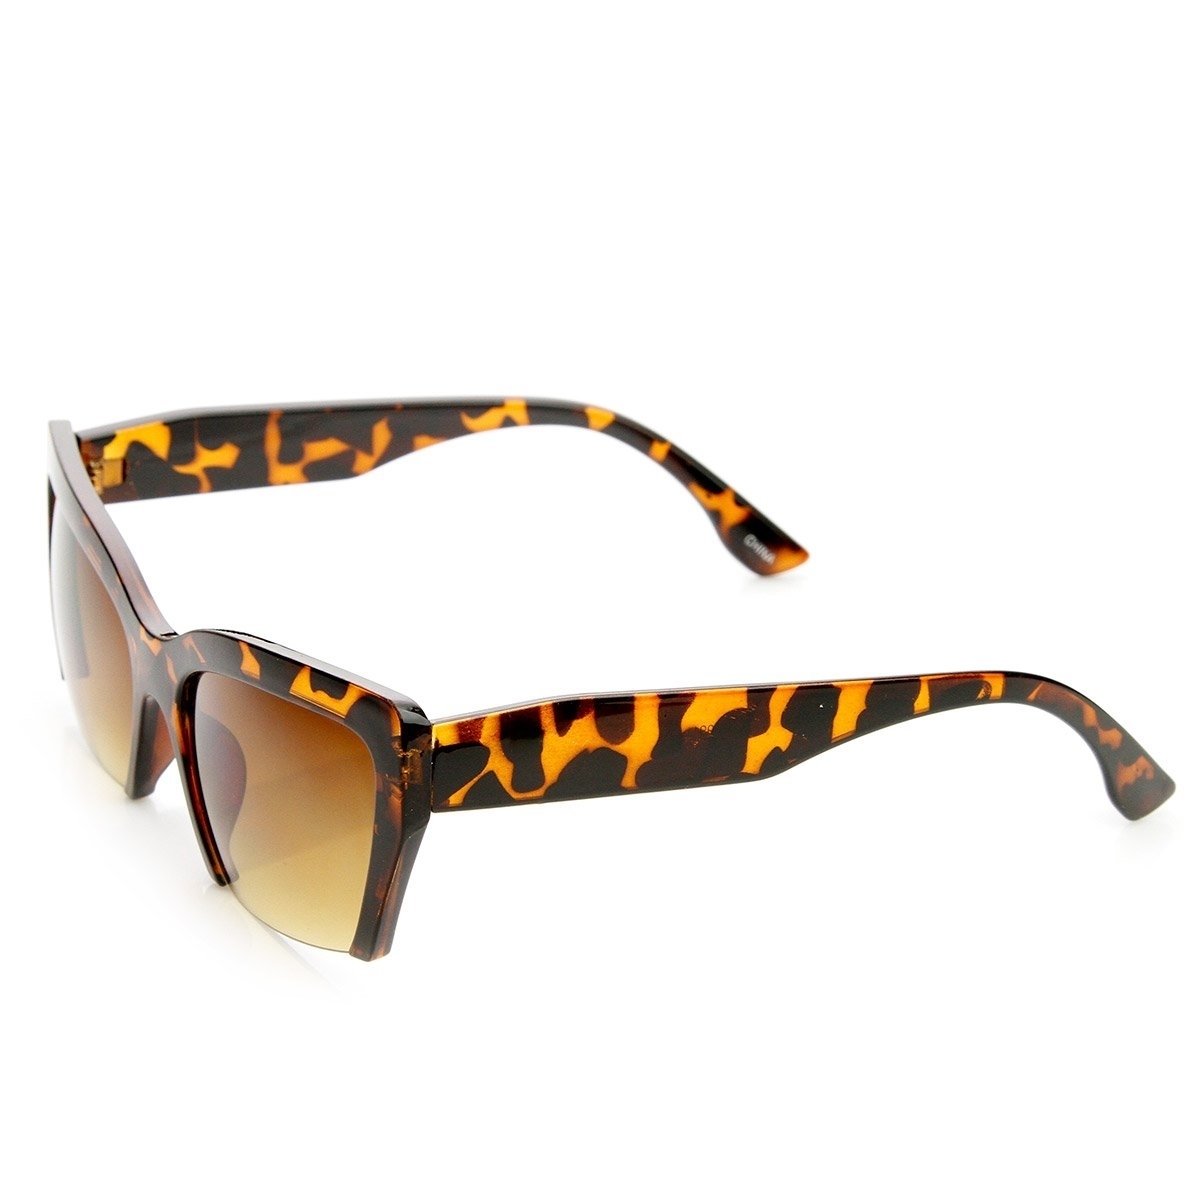 Womens Mod Fashion Semi-Rimless Cat Eye Sunglasses - Brown-Tortoise